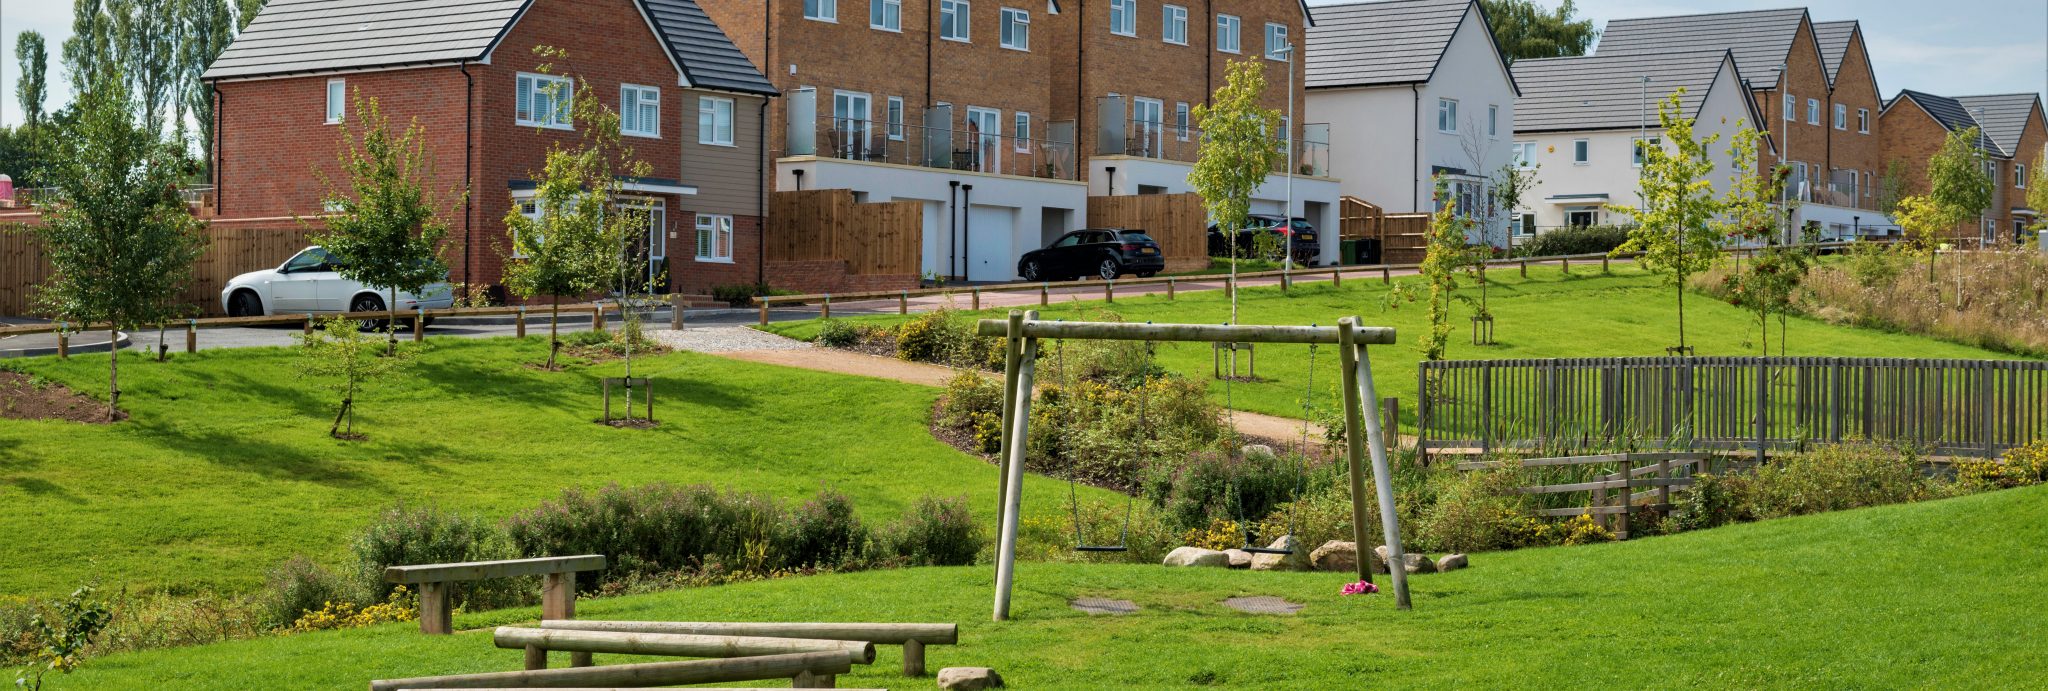 Play area and homes at Longbridge Birmingham.